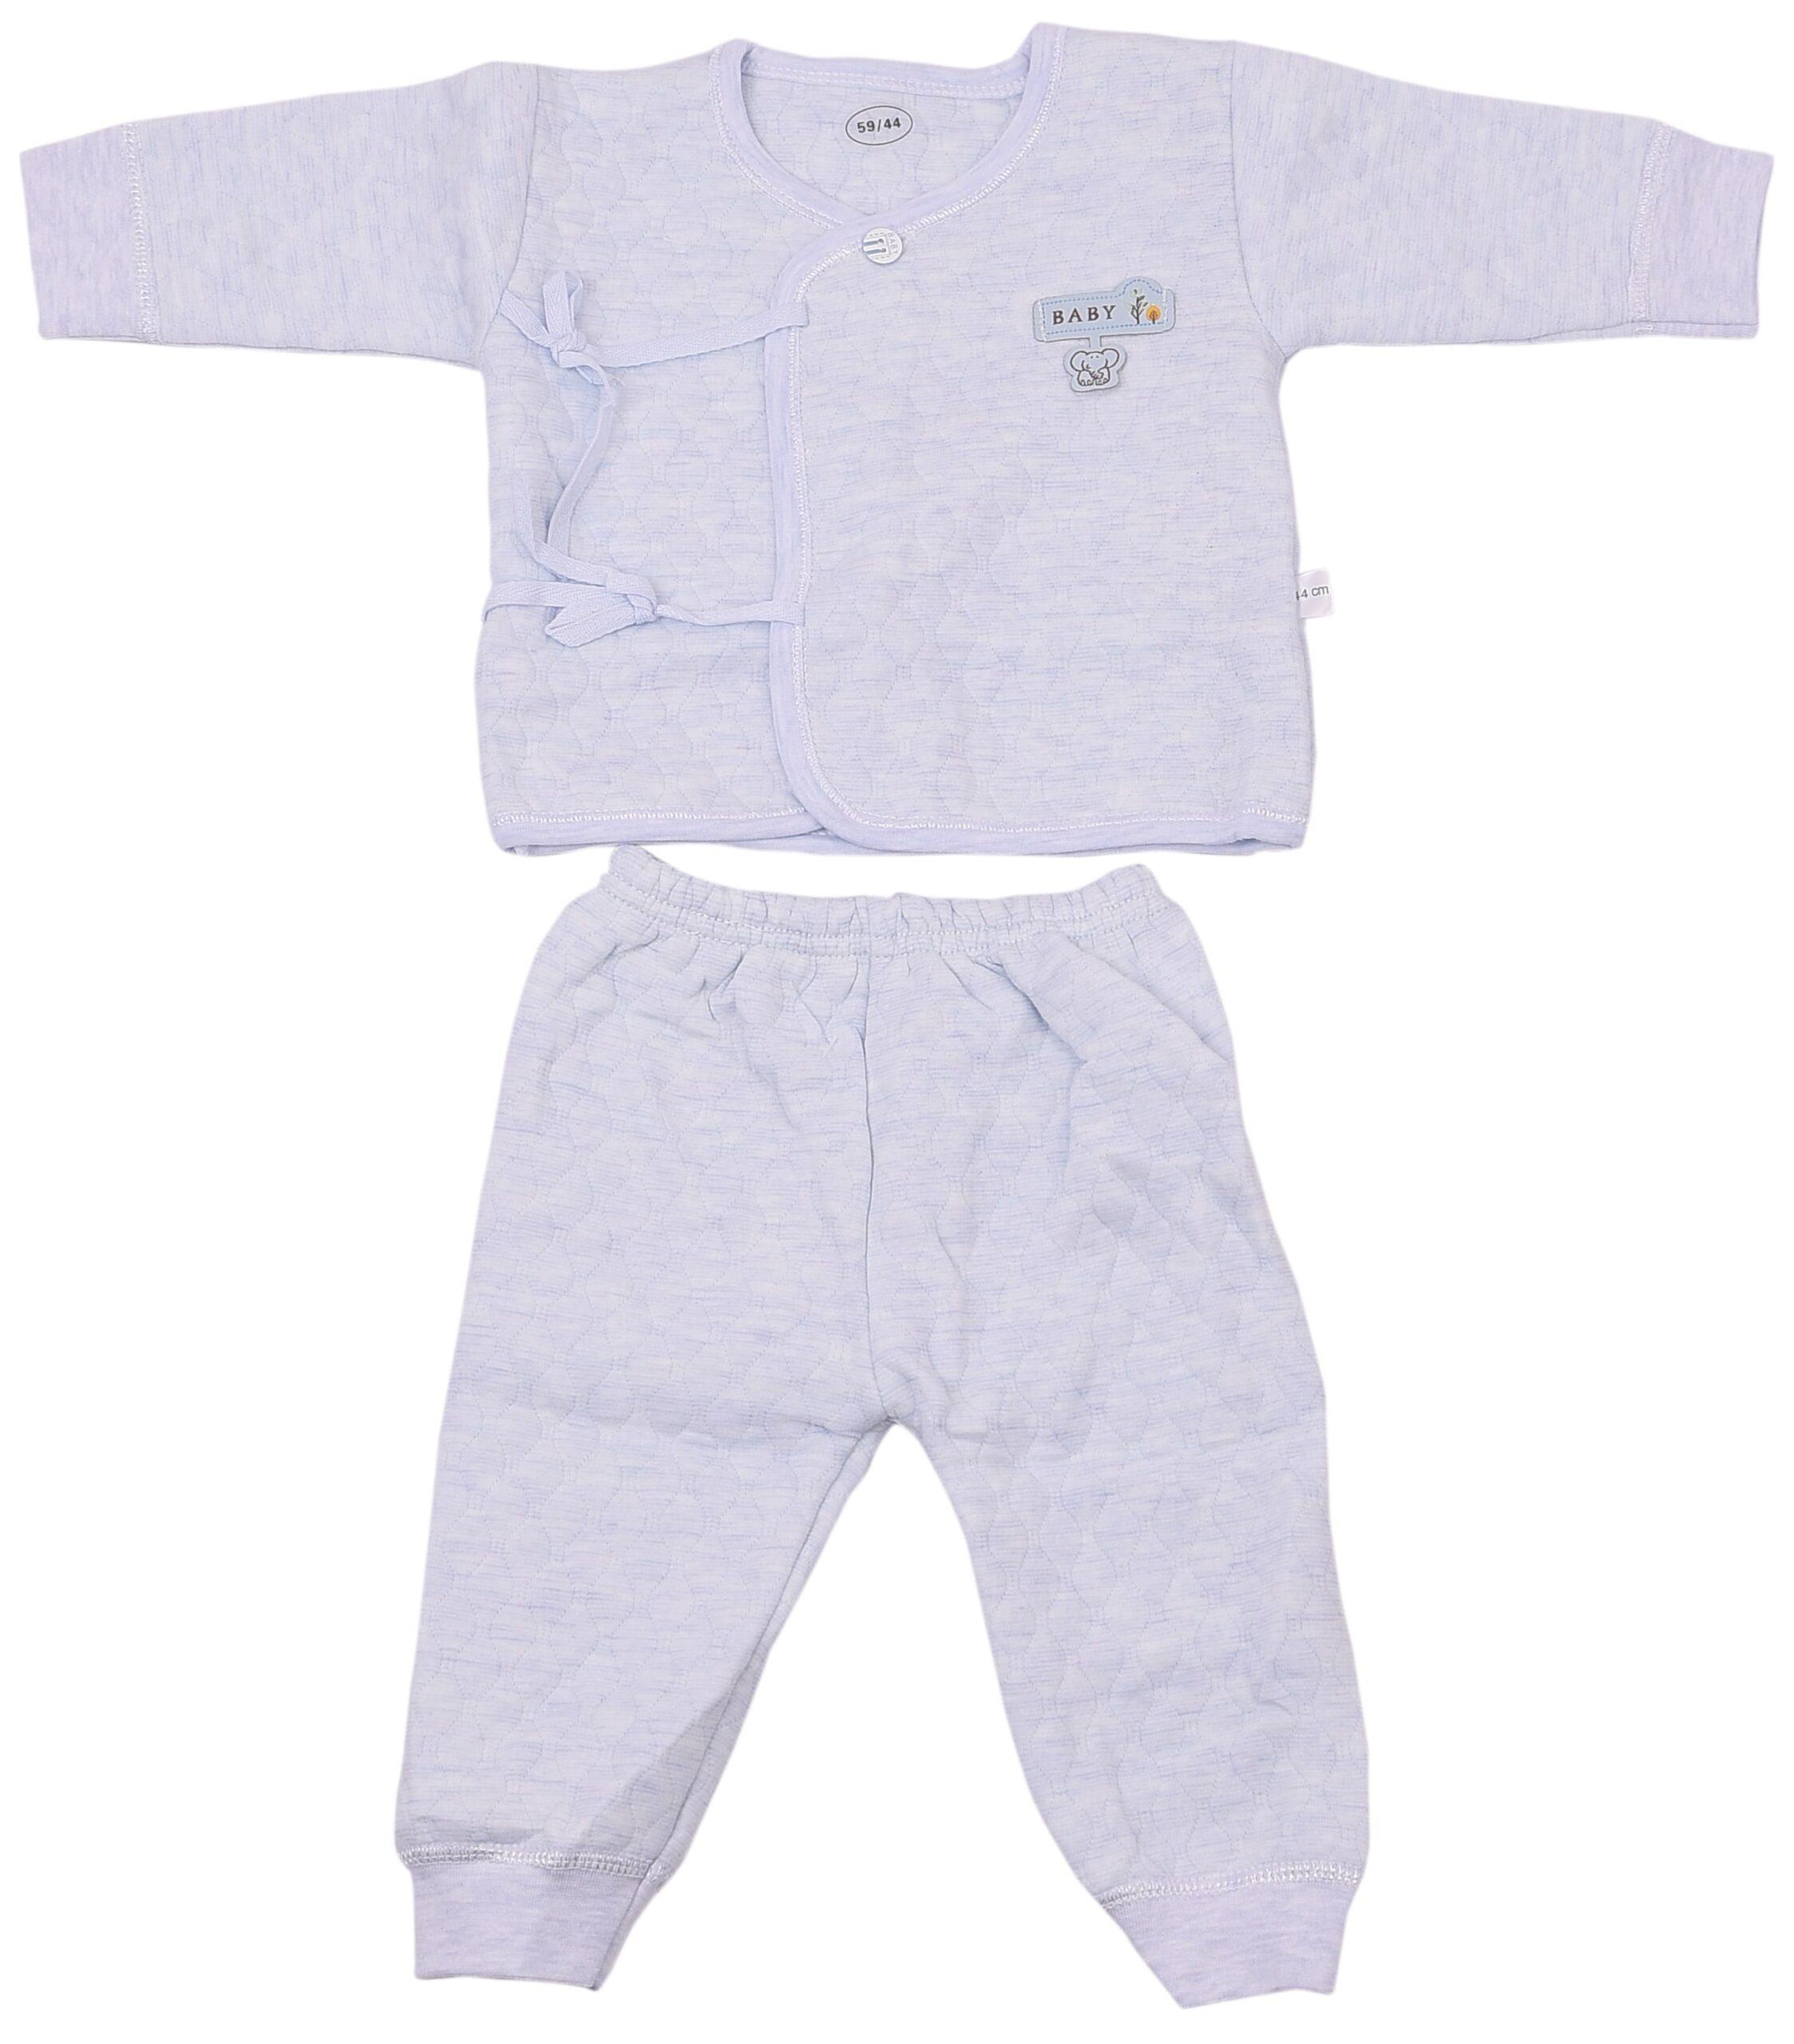 Baby's Warm Unisex Cotton Pant and Shirt Set - Blue